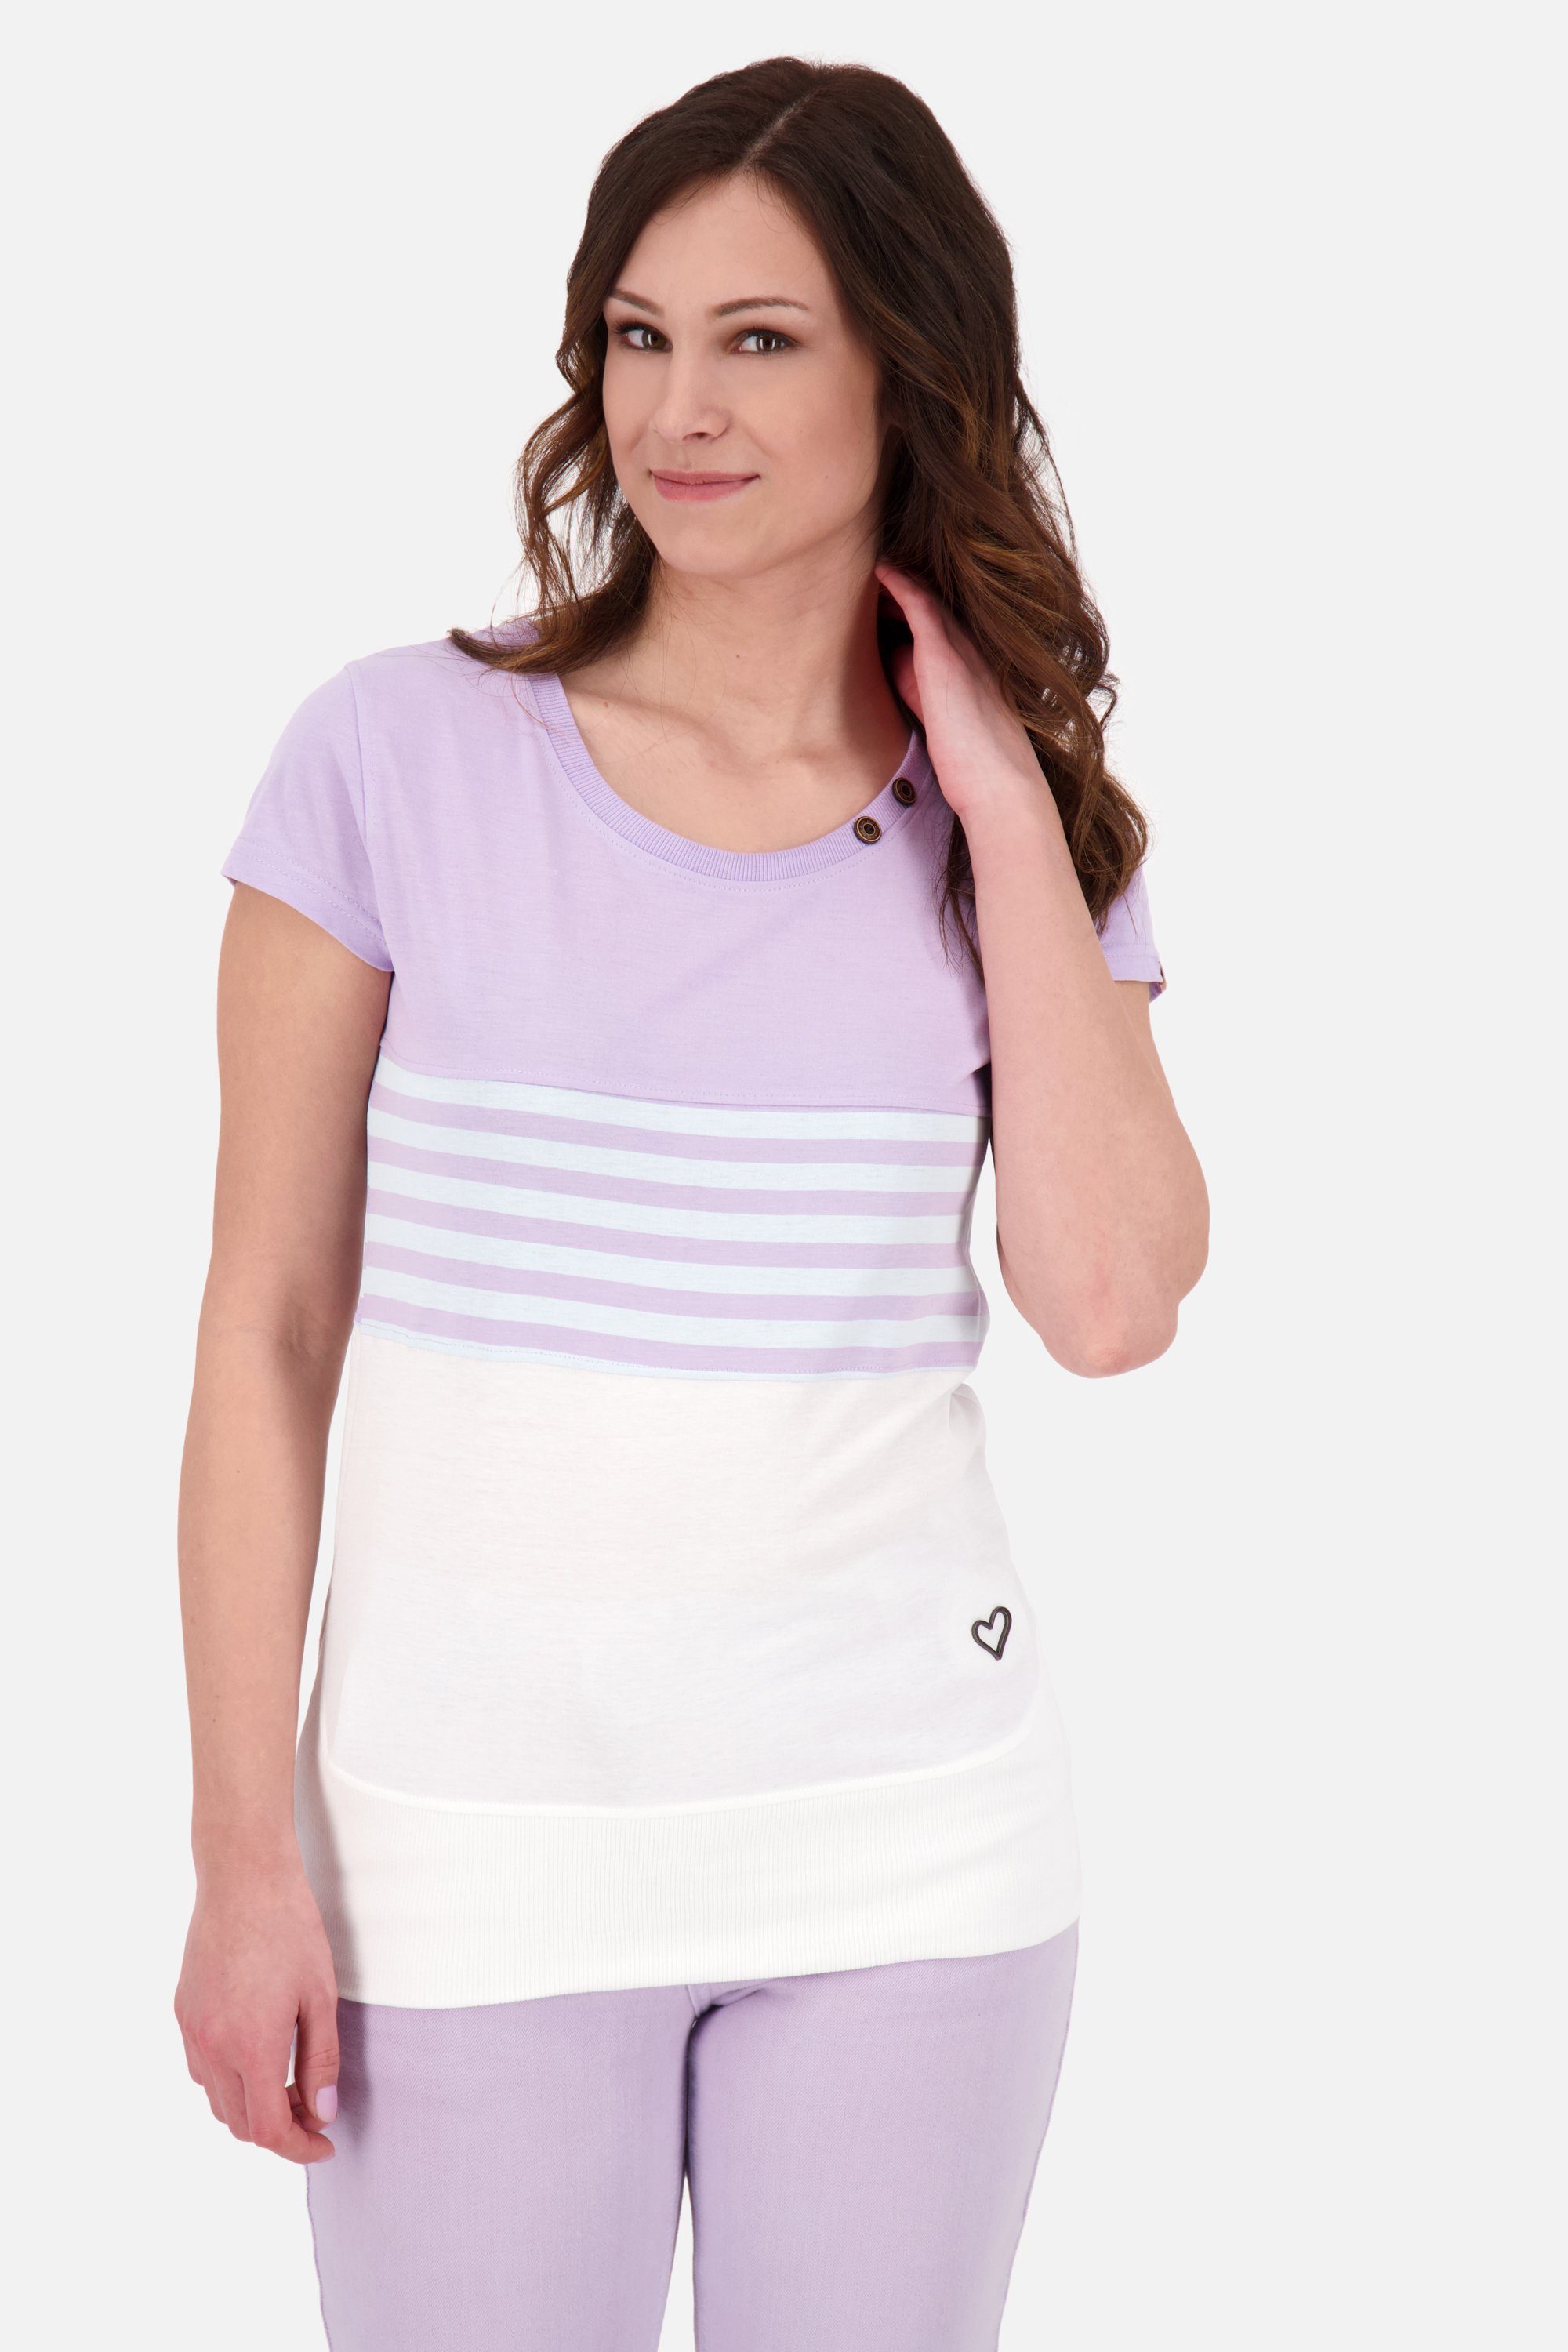 Shirt lavender Kurzarmshirt, Rundhalsshirt digital Kickin Shirt Z Alife CoriAK & Damen